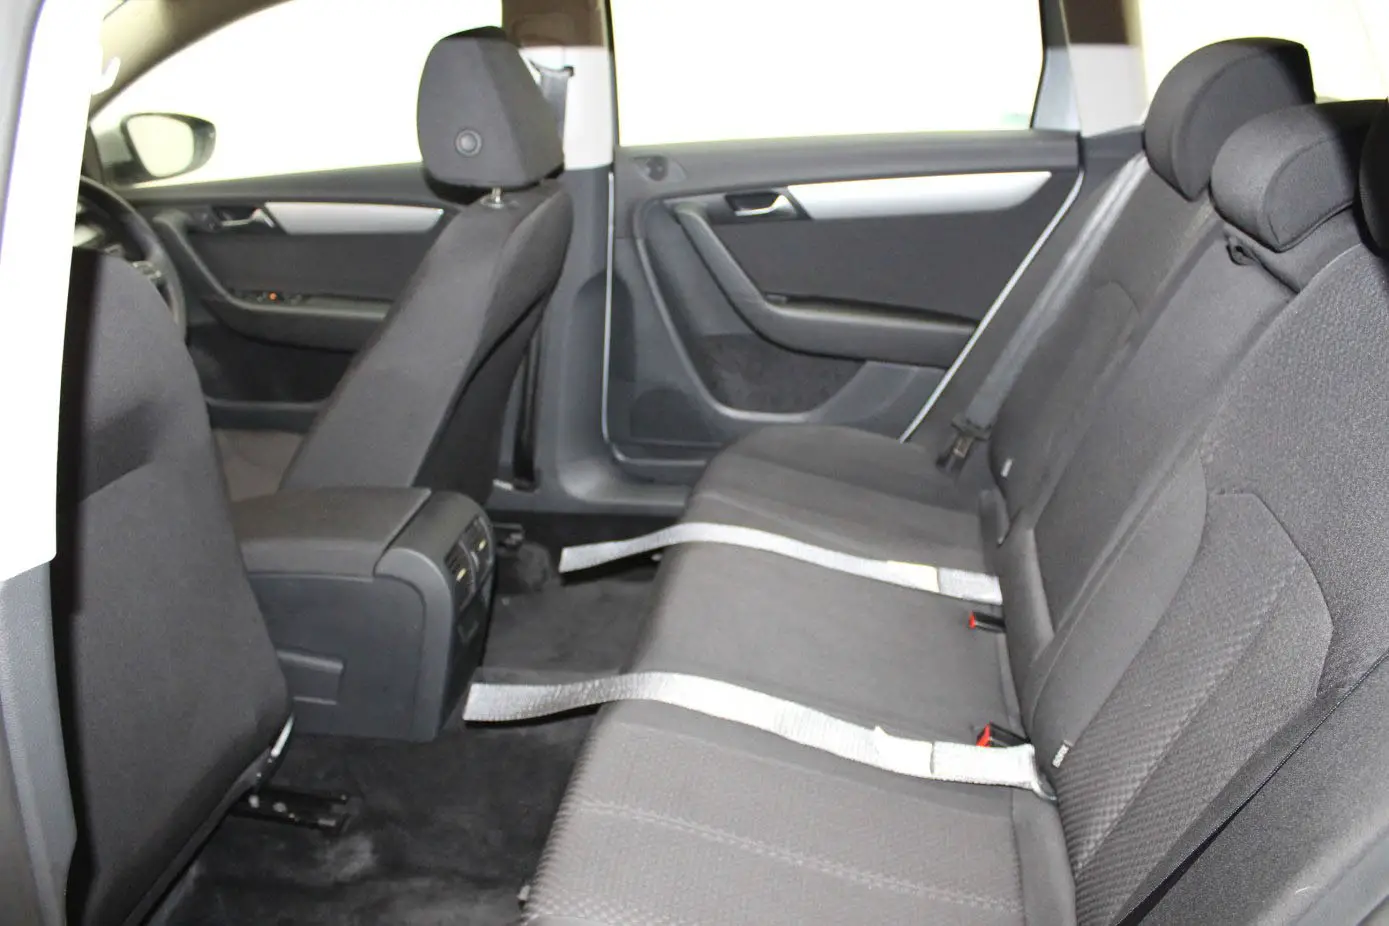 Toyota IQ rear seat view